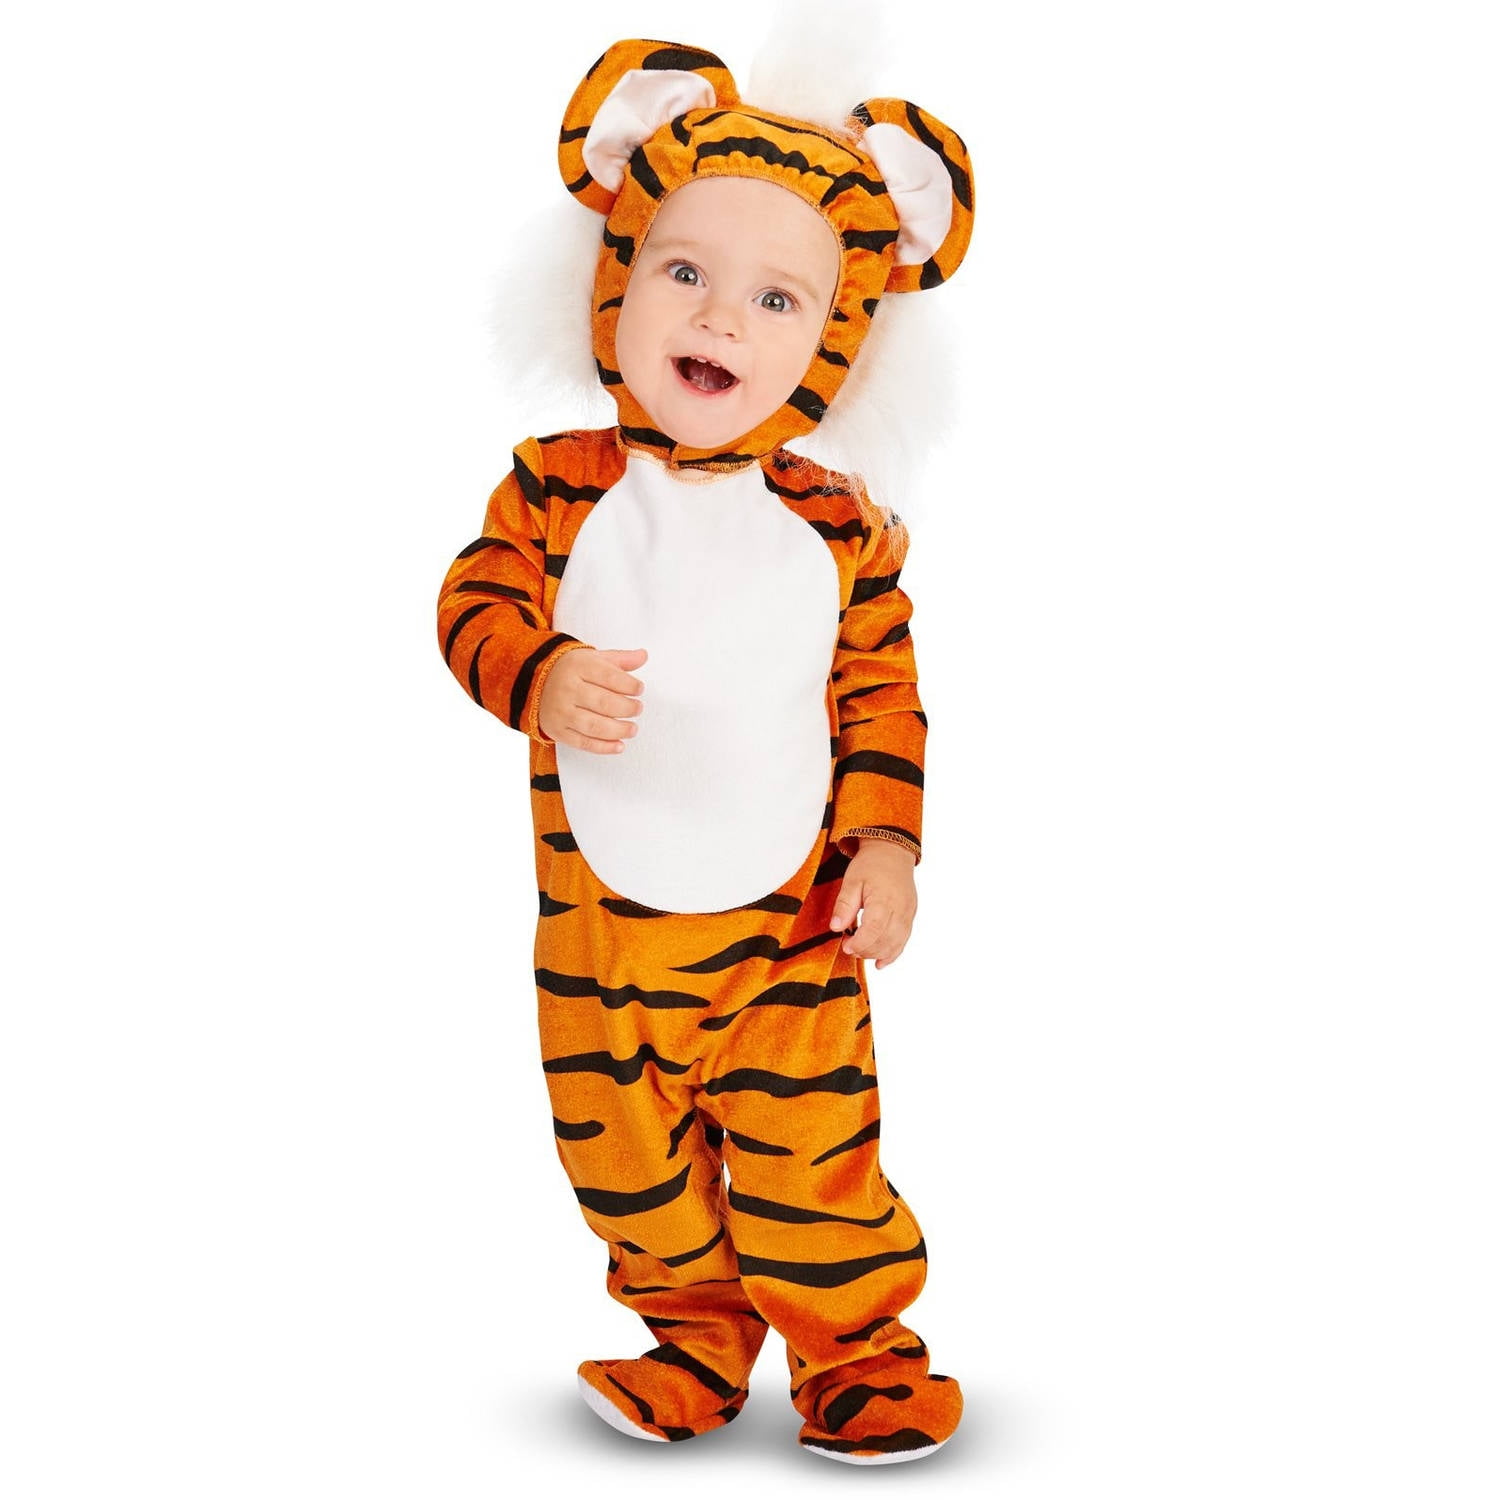 Lil' Tiger Toddler Halloween Costume, Size 3T-4T - Walmart.com